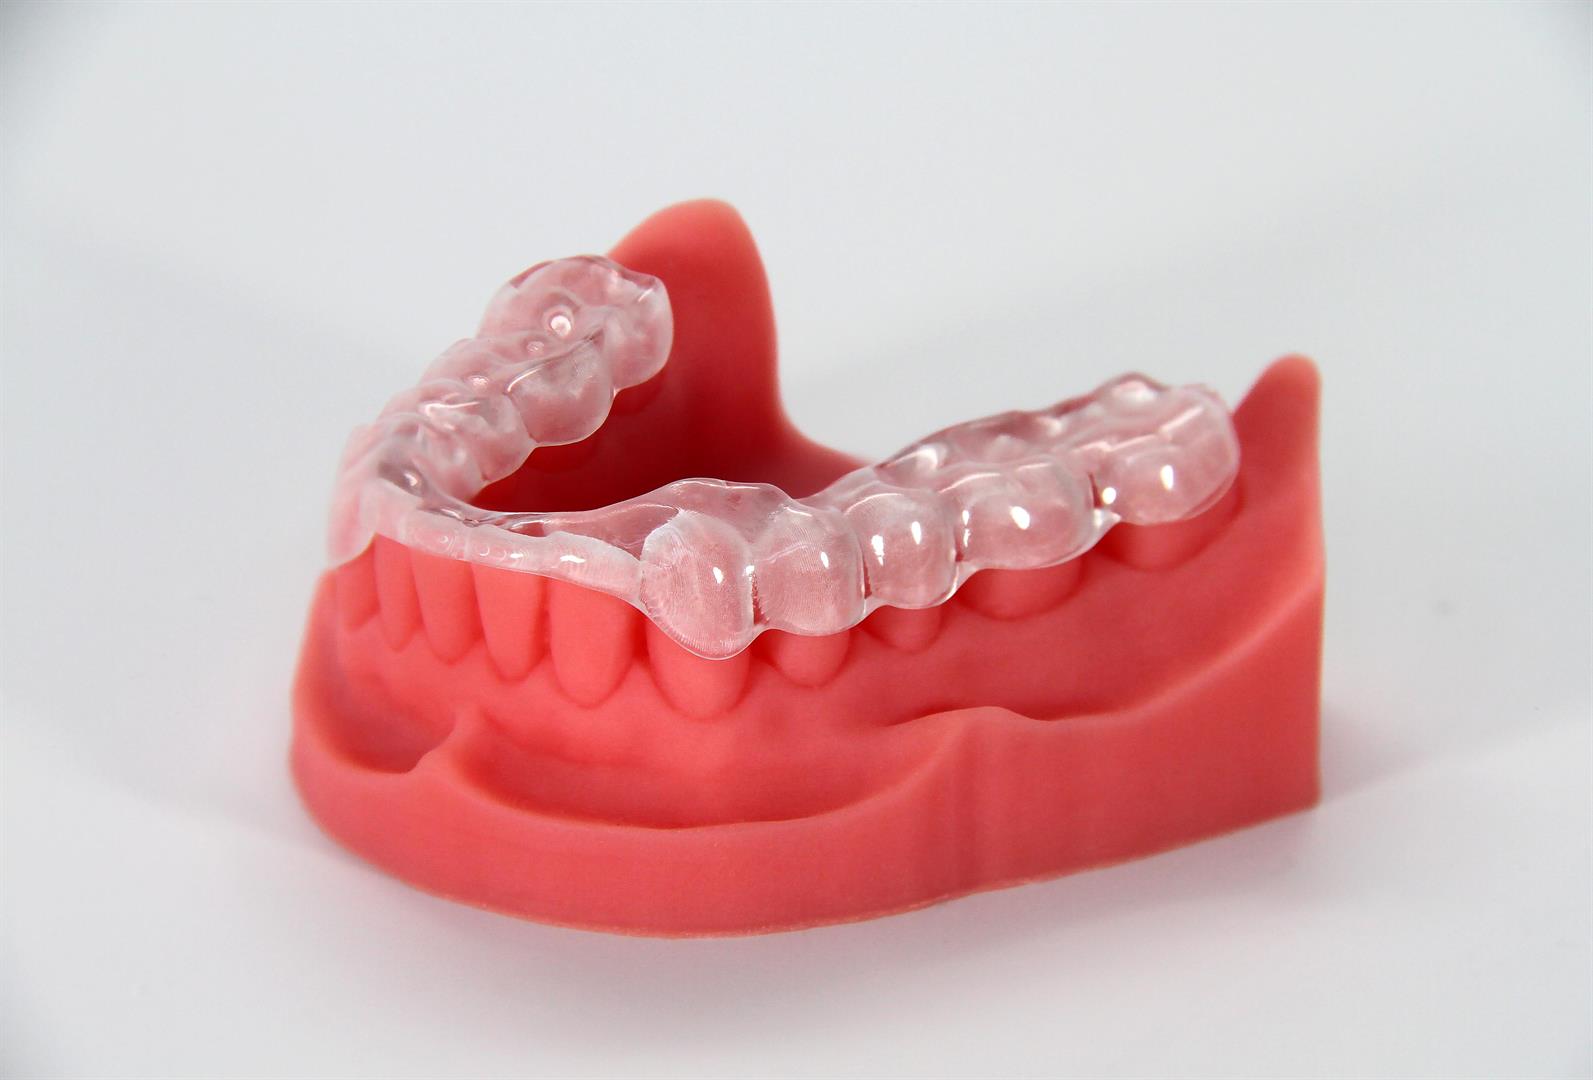 3D printed dental applications